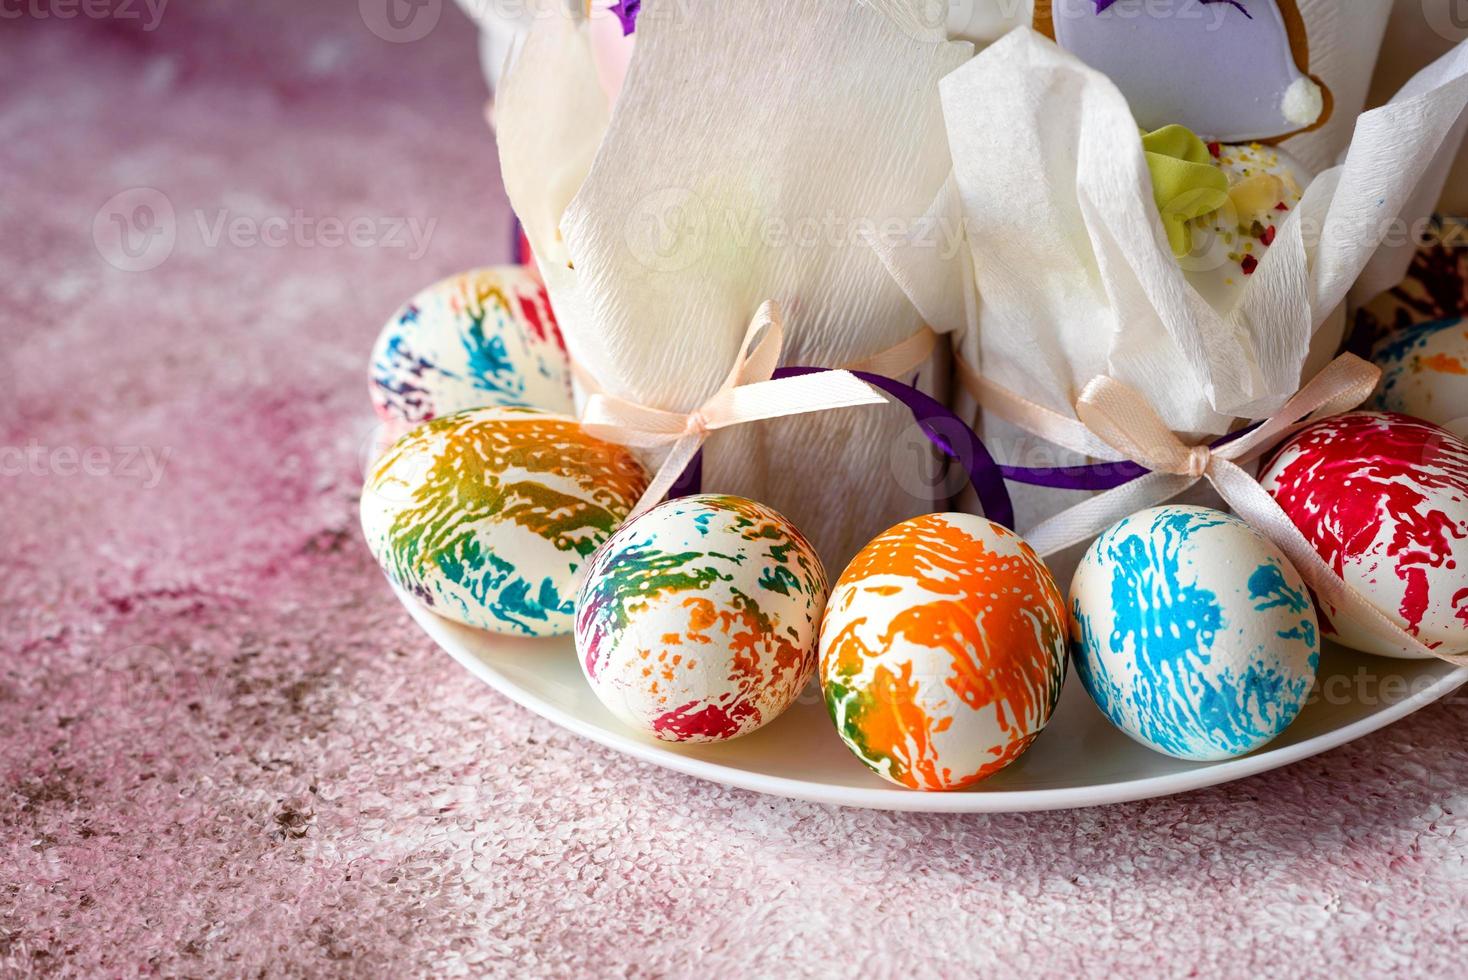 huevos de pascua de colores brillantes con pasteles de pascua foto